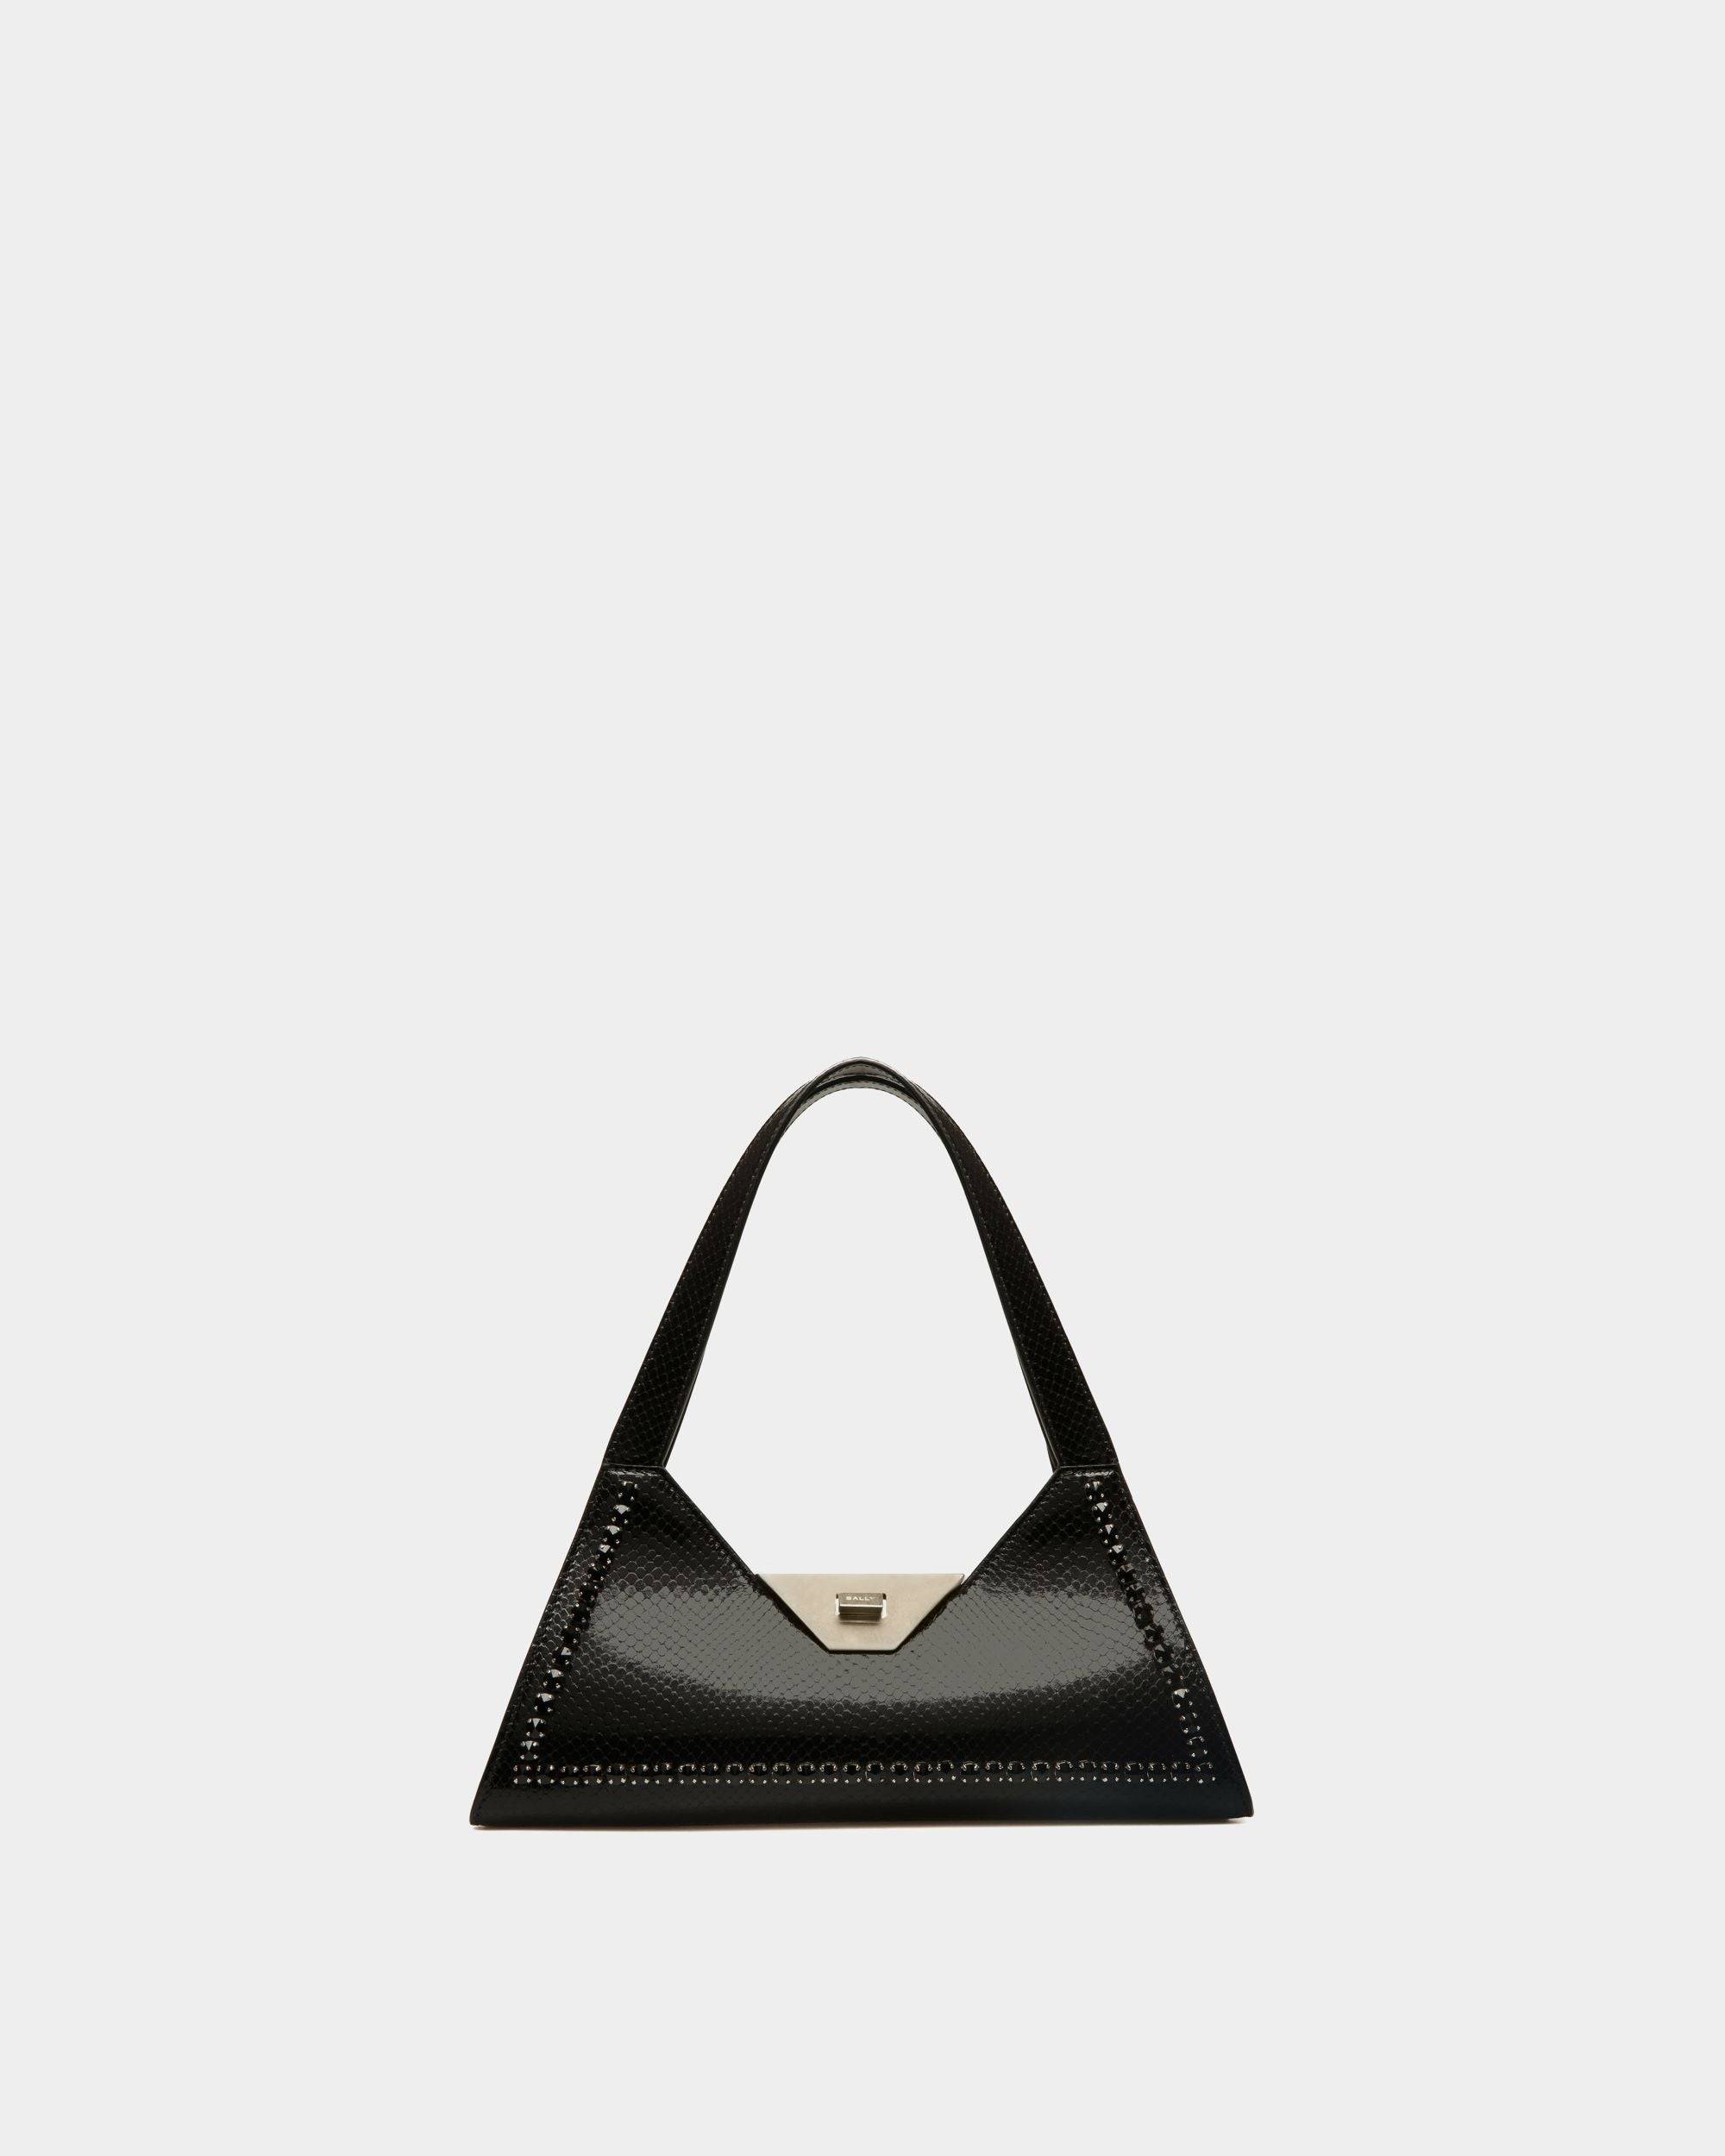 Tilt | Women's Small Shoulder Bag in Black Python Printed Leather | Bally | Still Life Front